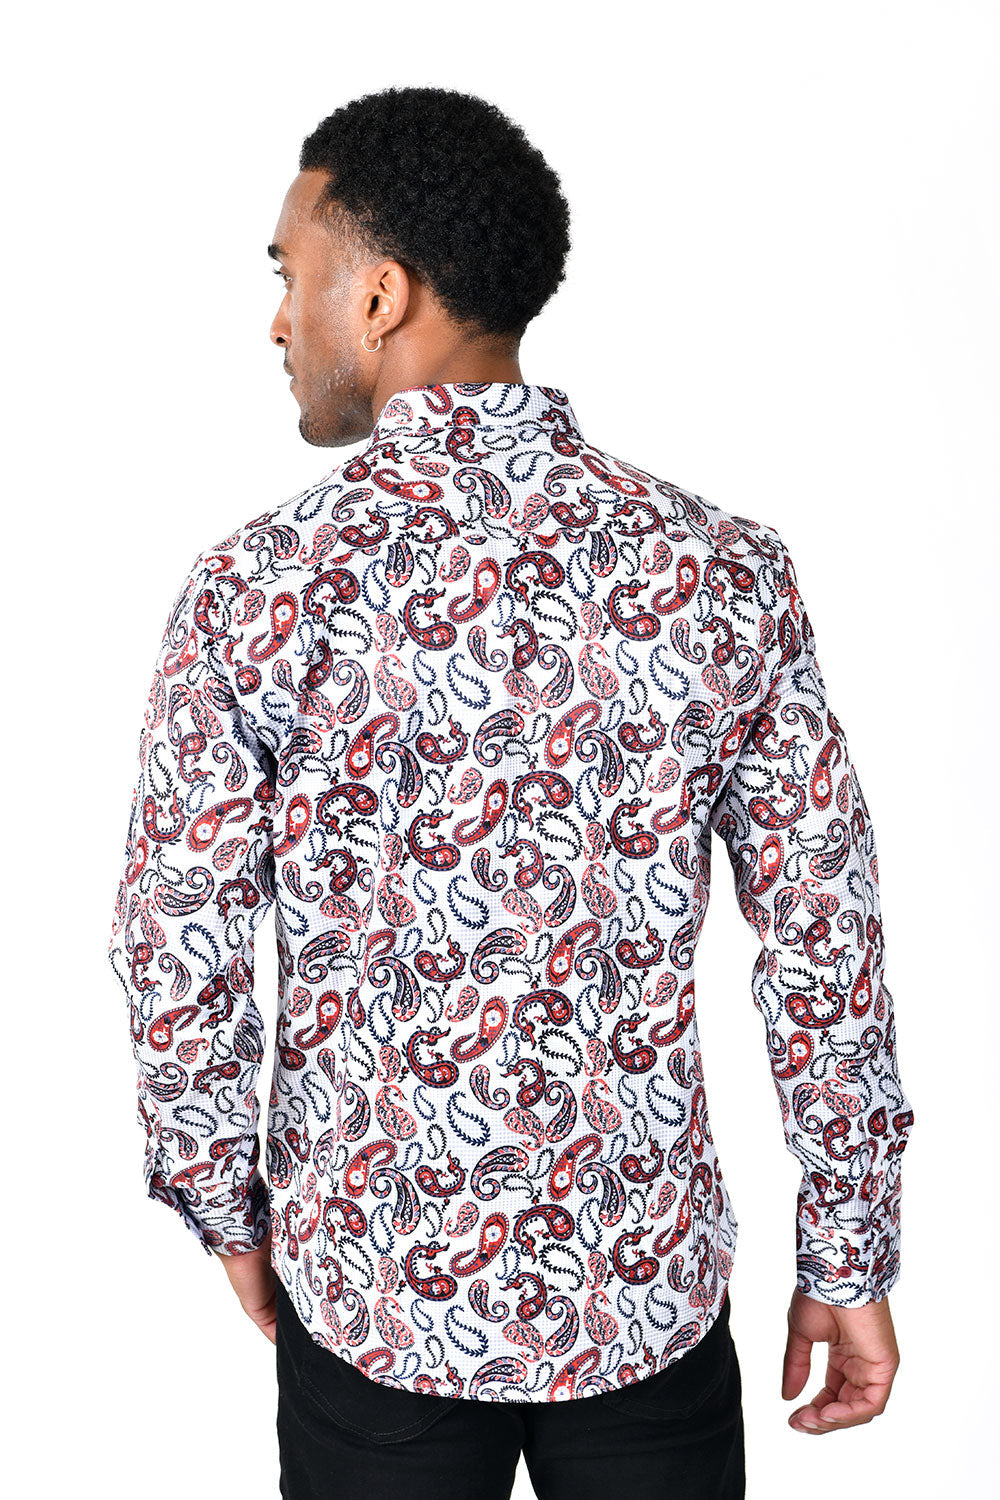 BARABAS Men's Printed Floral Paisley Design Red White Shirts VS33